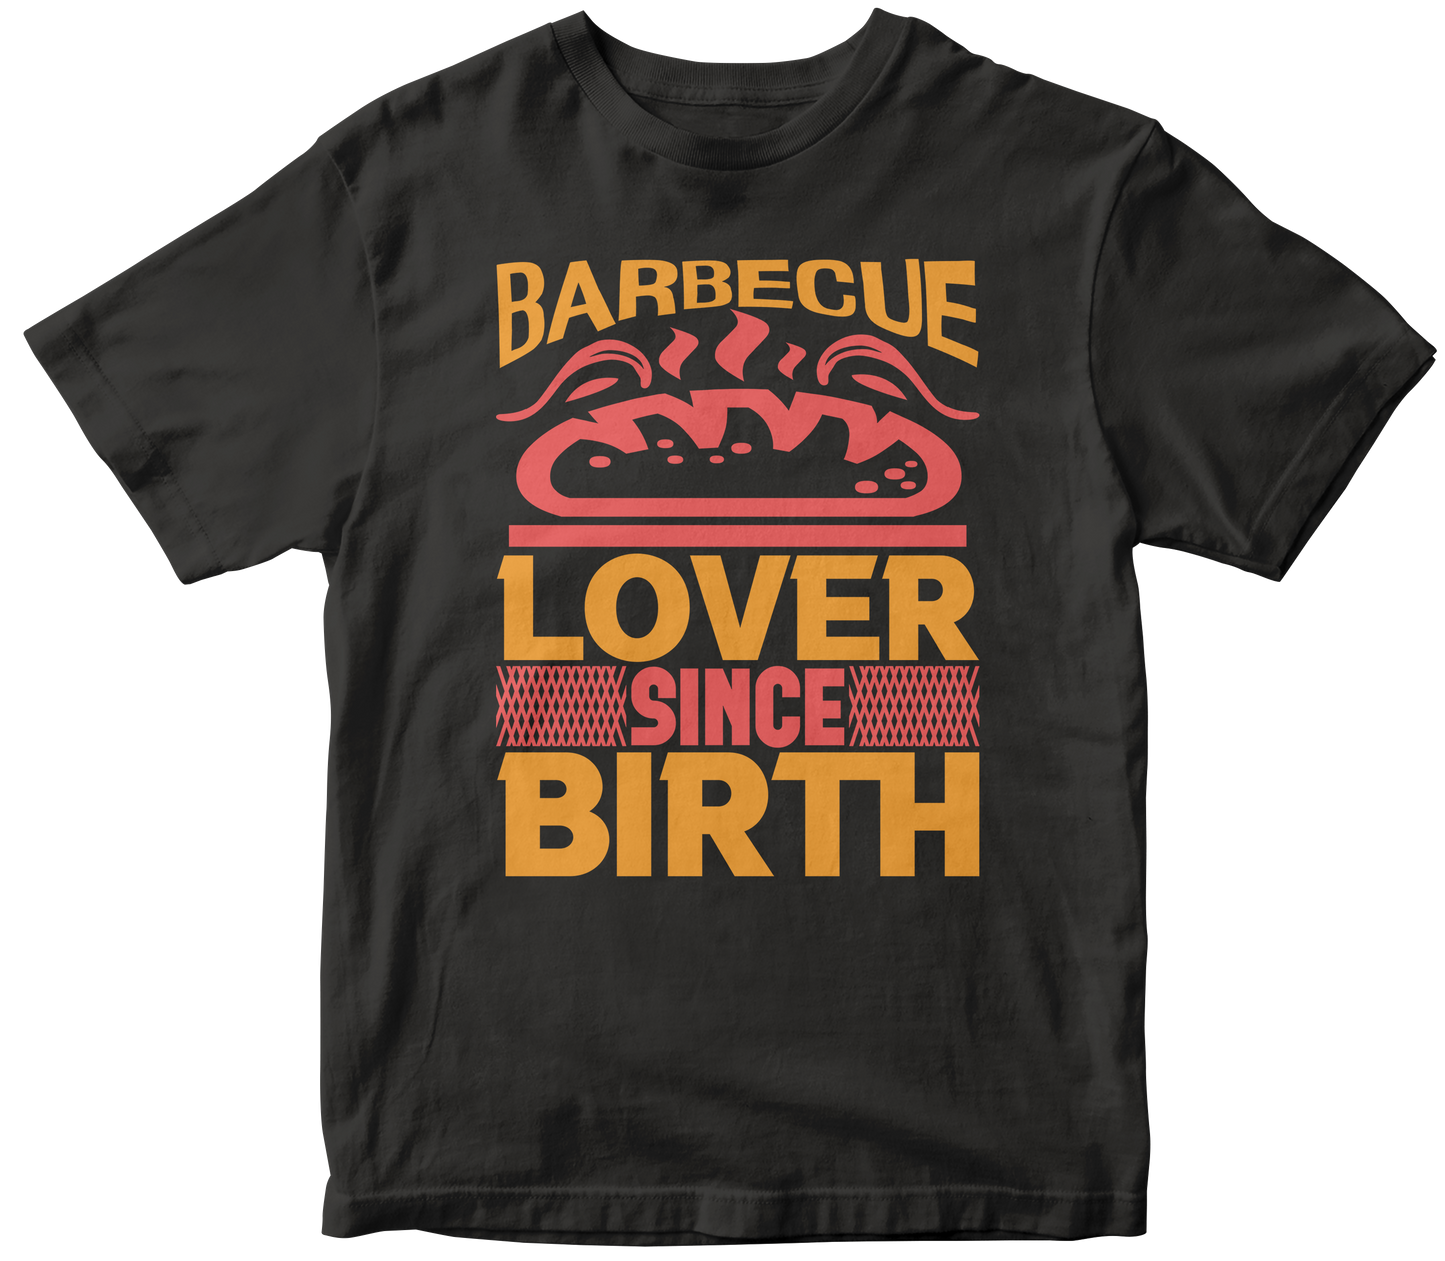 BBQ LOVER SINCE BIRTH